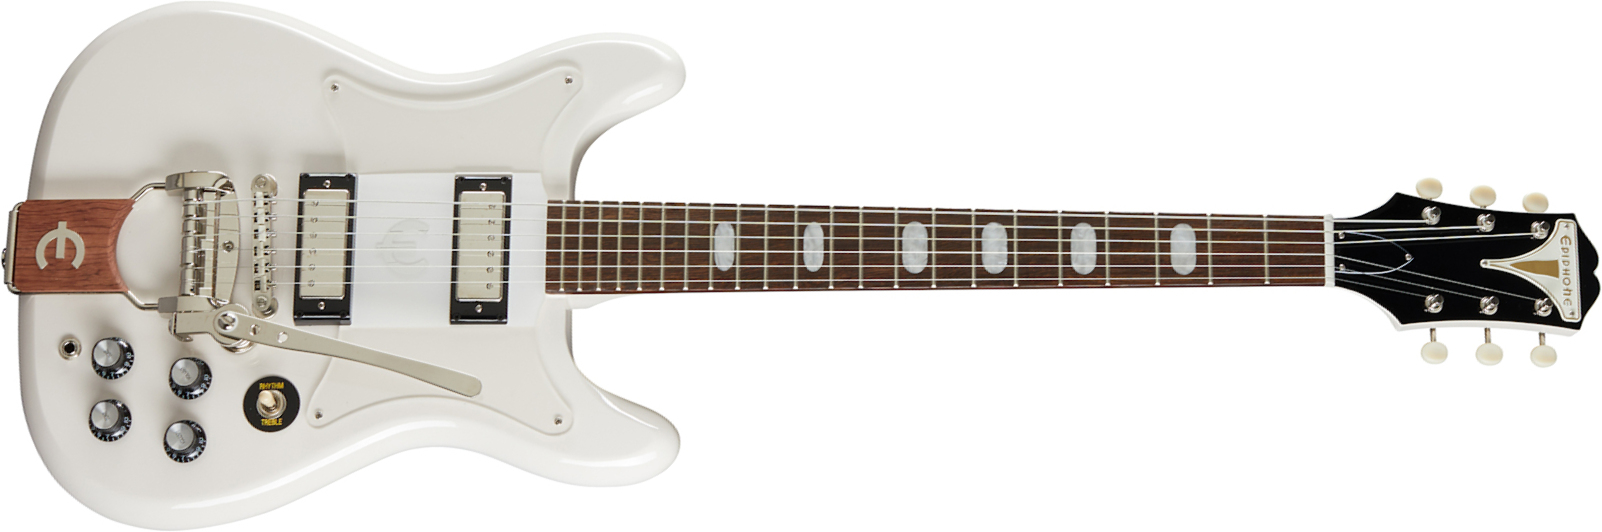 Epiphone Crestwood Custom 2mh Trem Lau - Polaris White - Retro rock electric guitar - Main picture